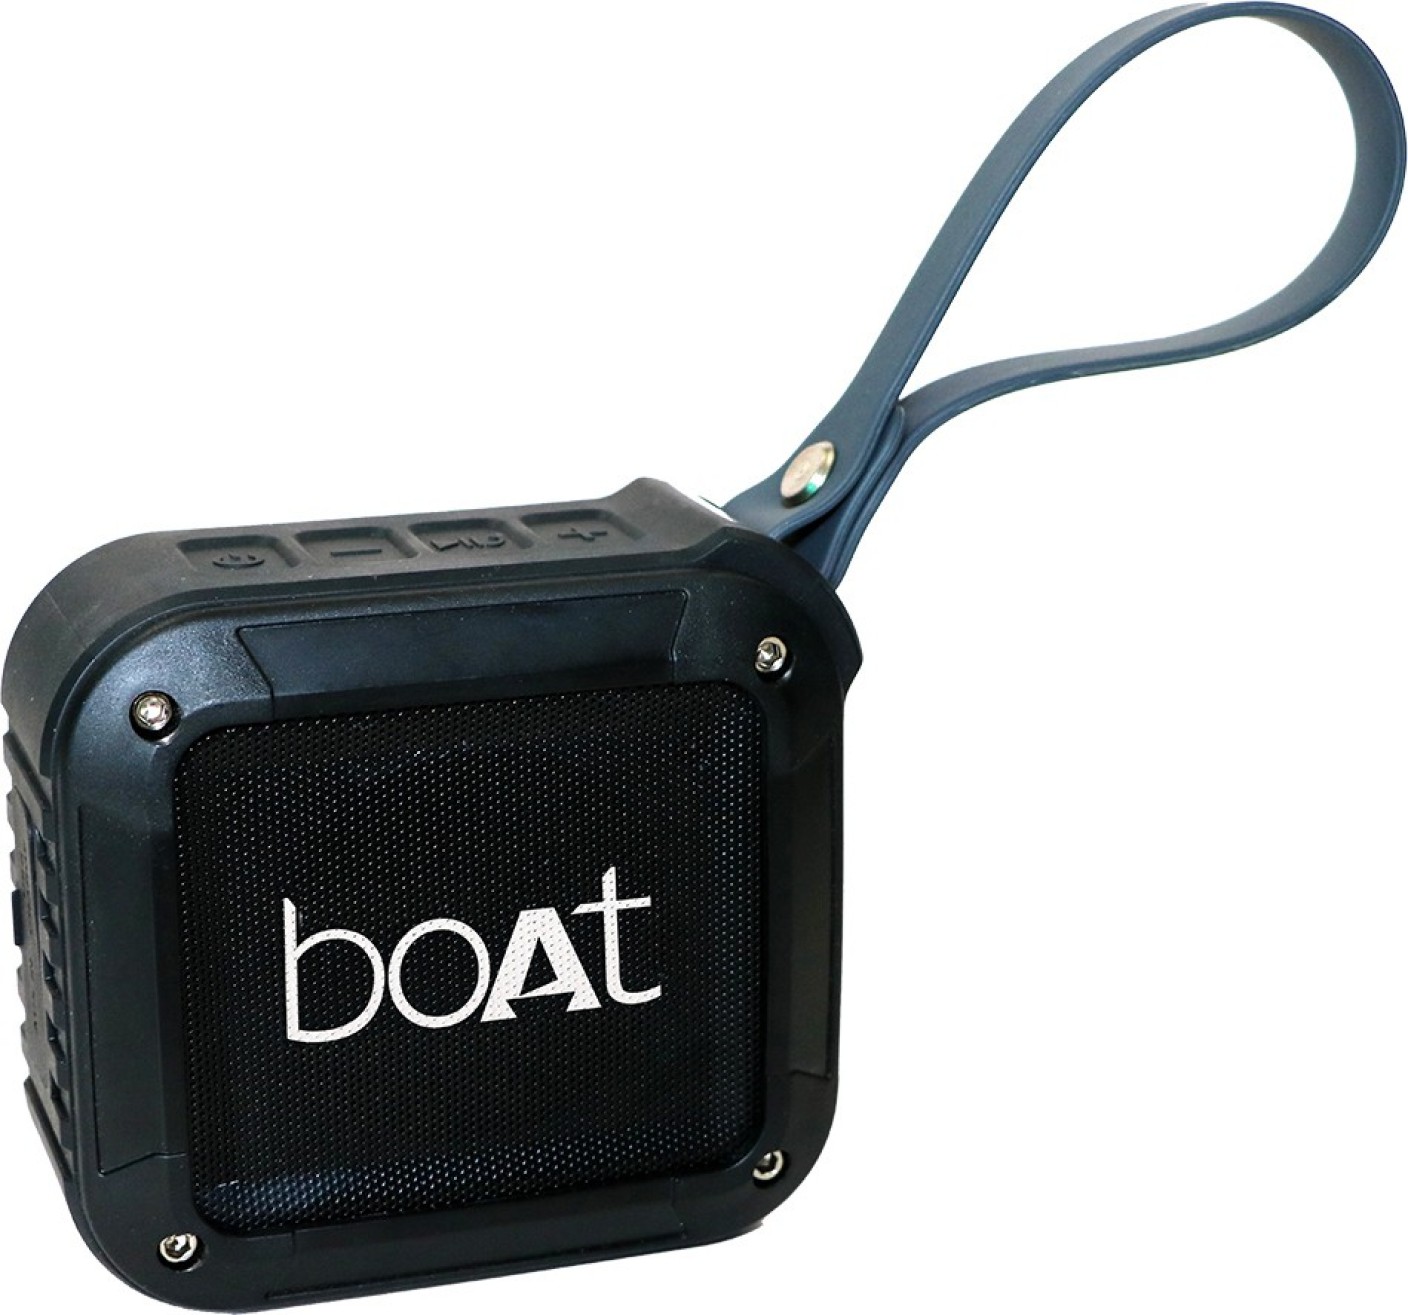 Buy boAt Stone 200 3 W Portable Bluetooth Speaker Online from Flipkart.com